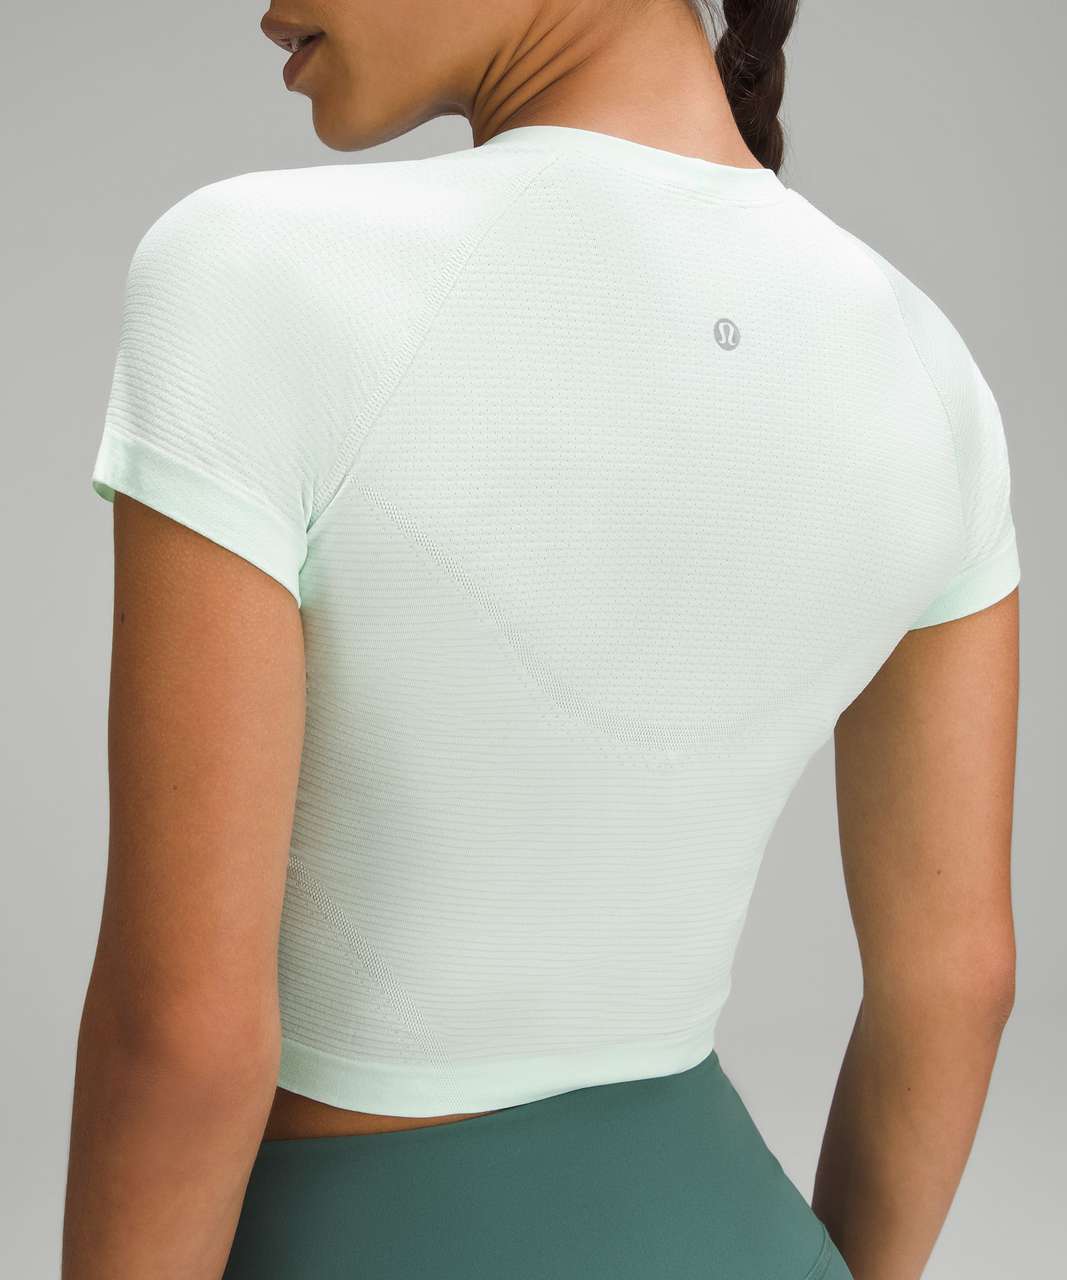 Lululemon Swiftly Tech Short Sleeve Shirt 2.0 - Delicate Mint